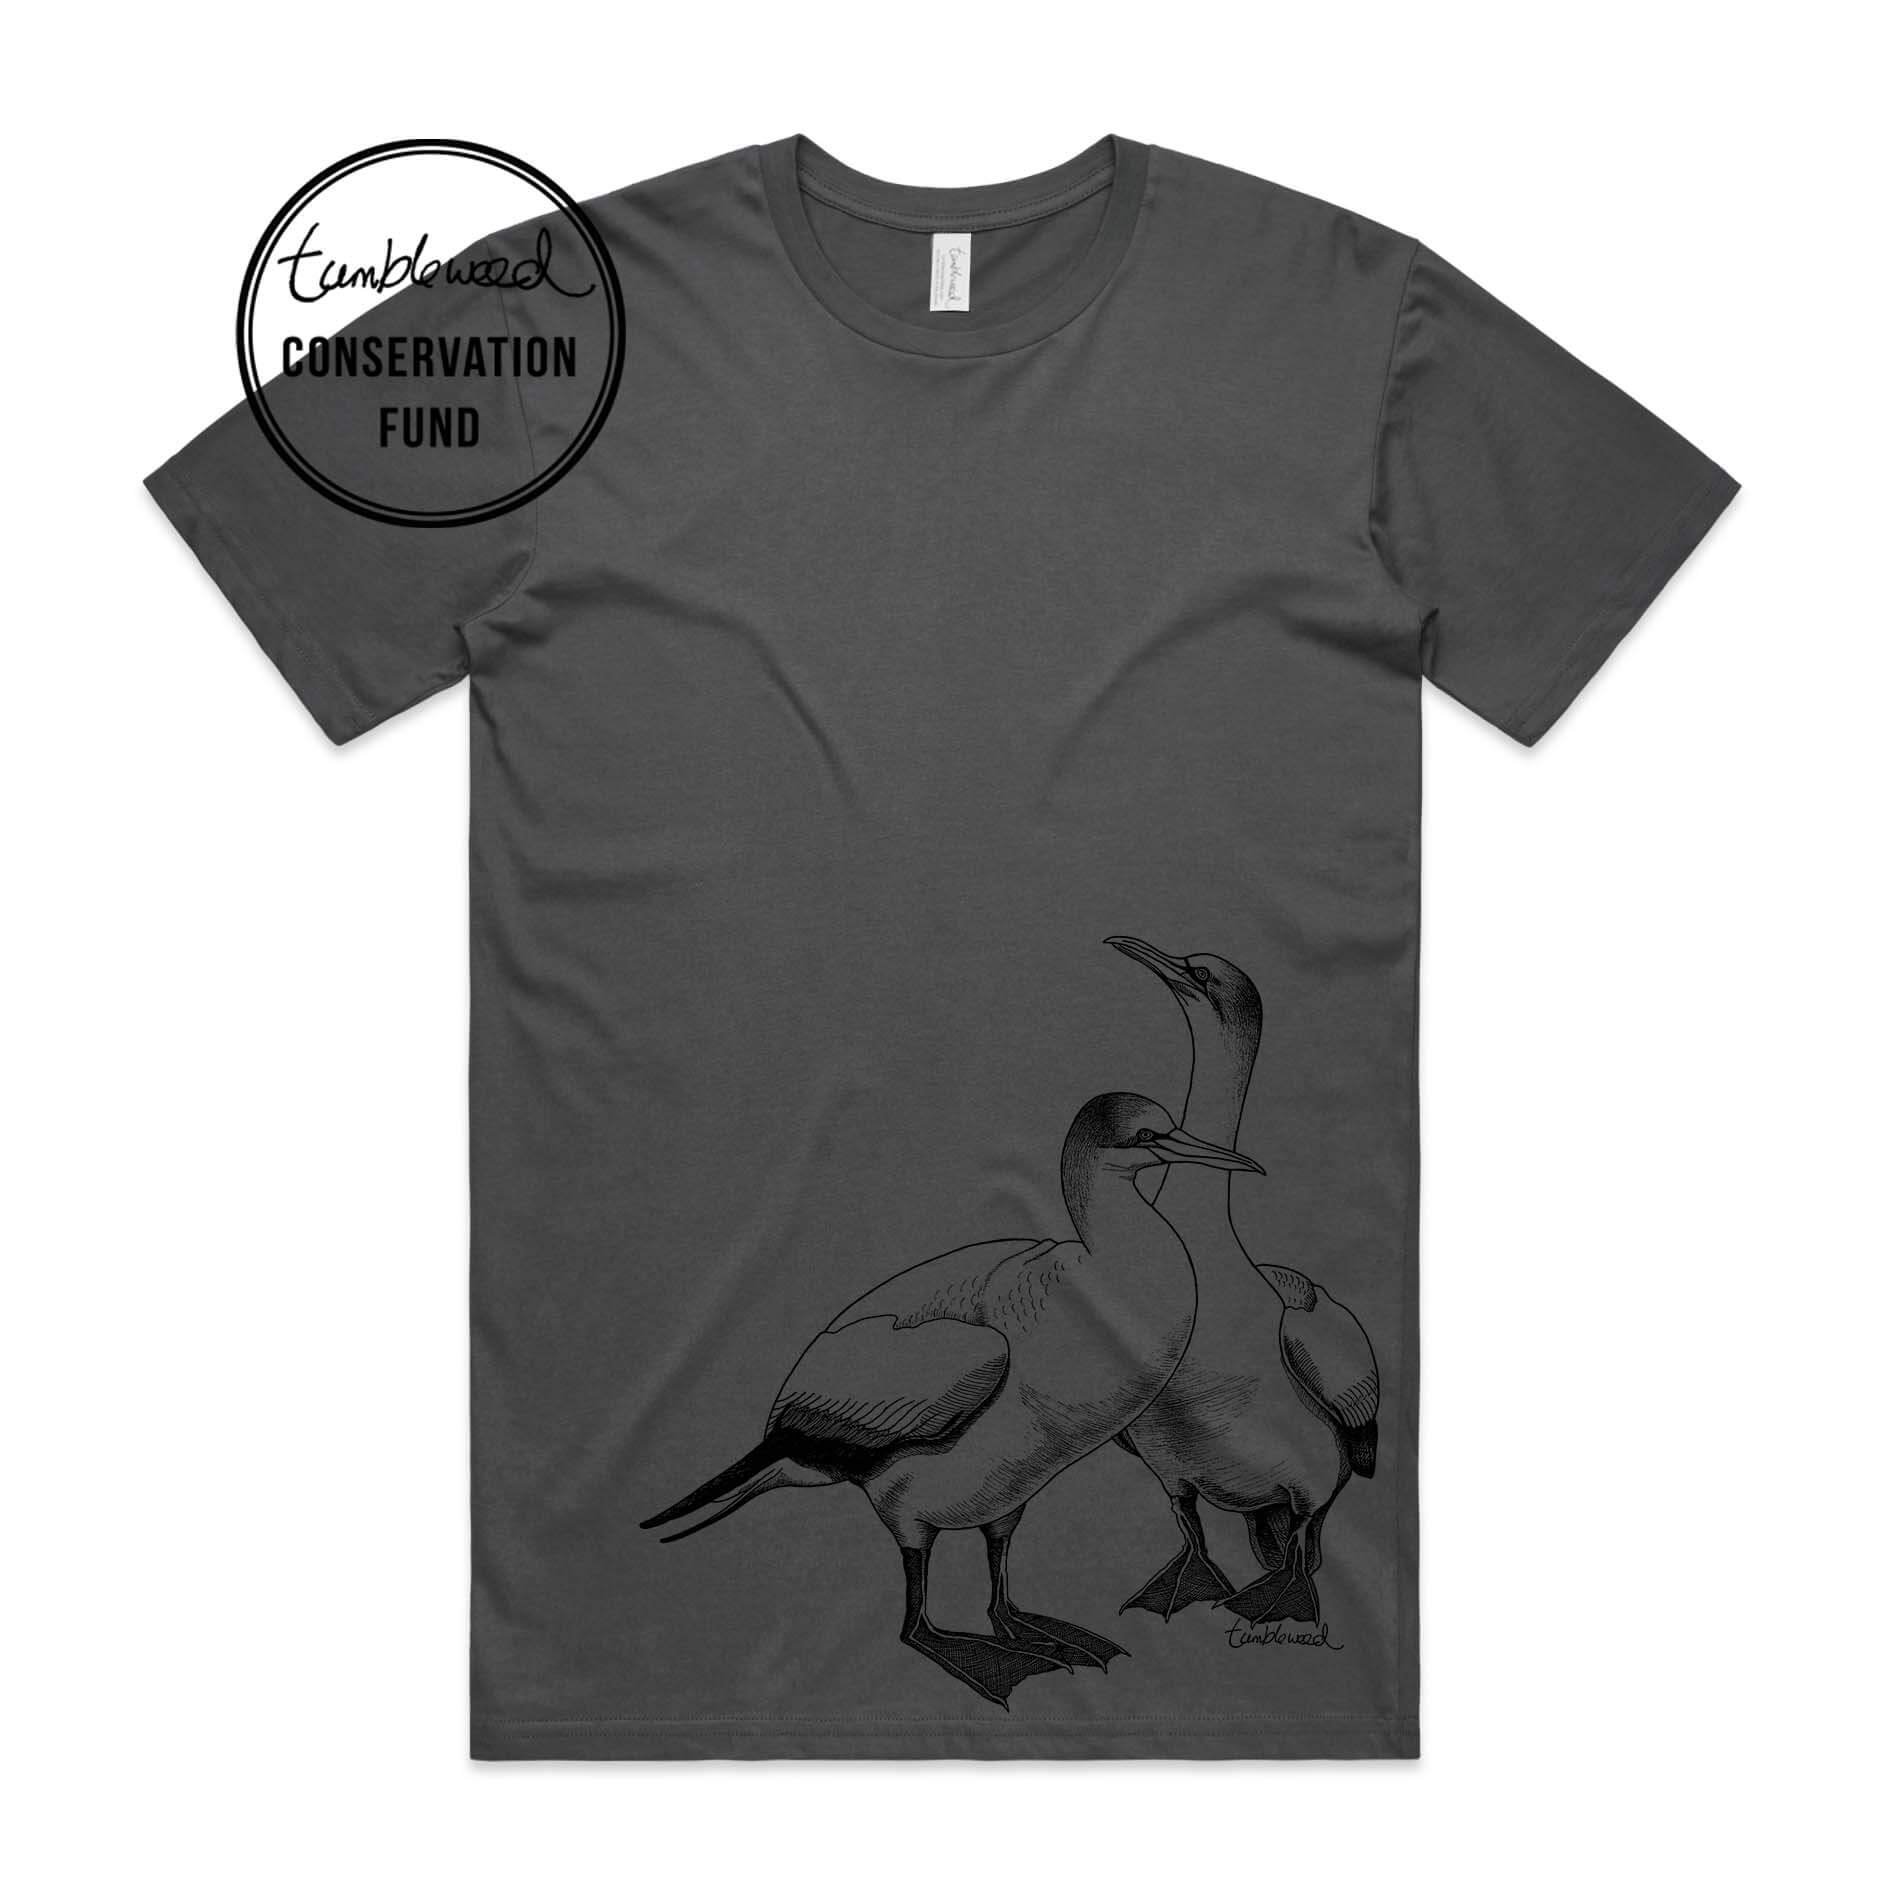 Charcoal, female t-shirt featuring a screen printed gannet design.